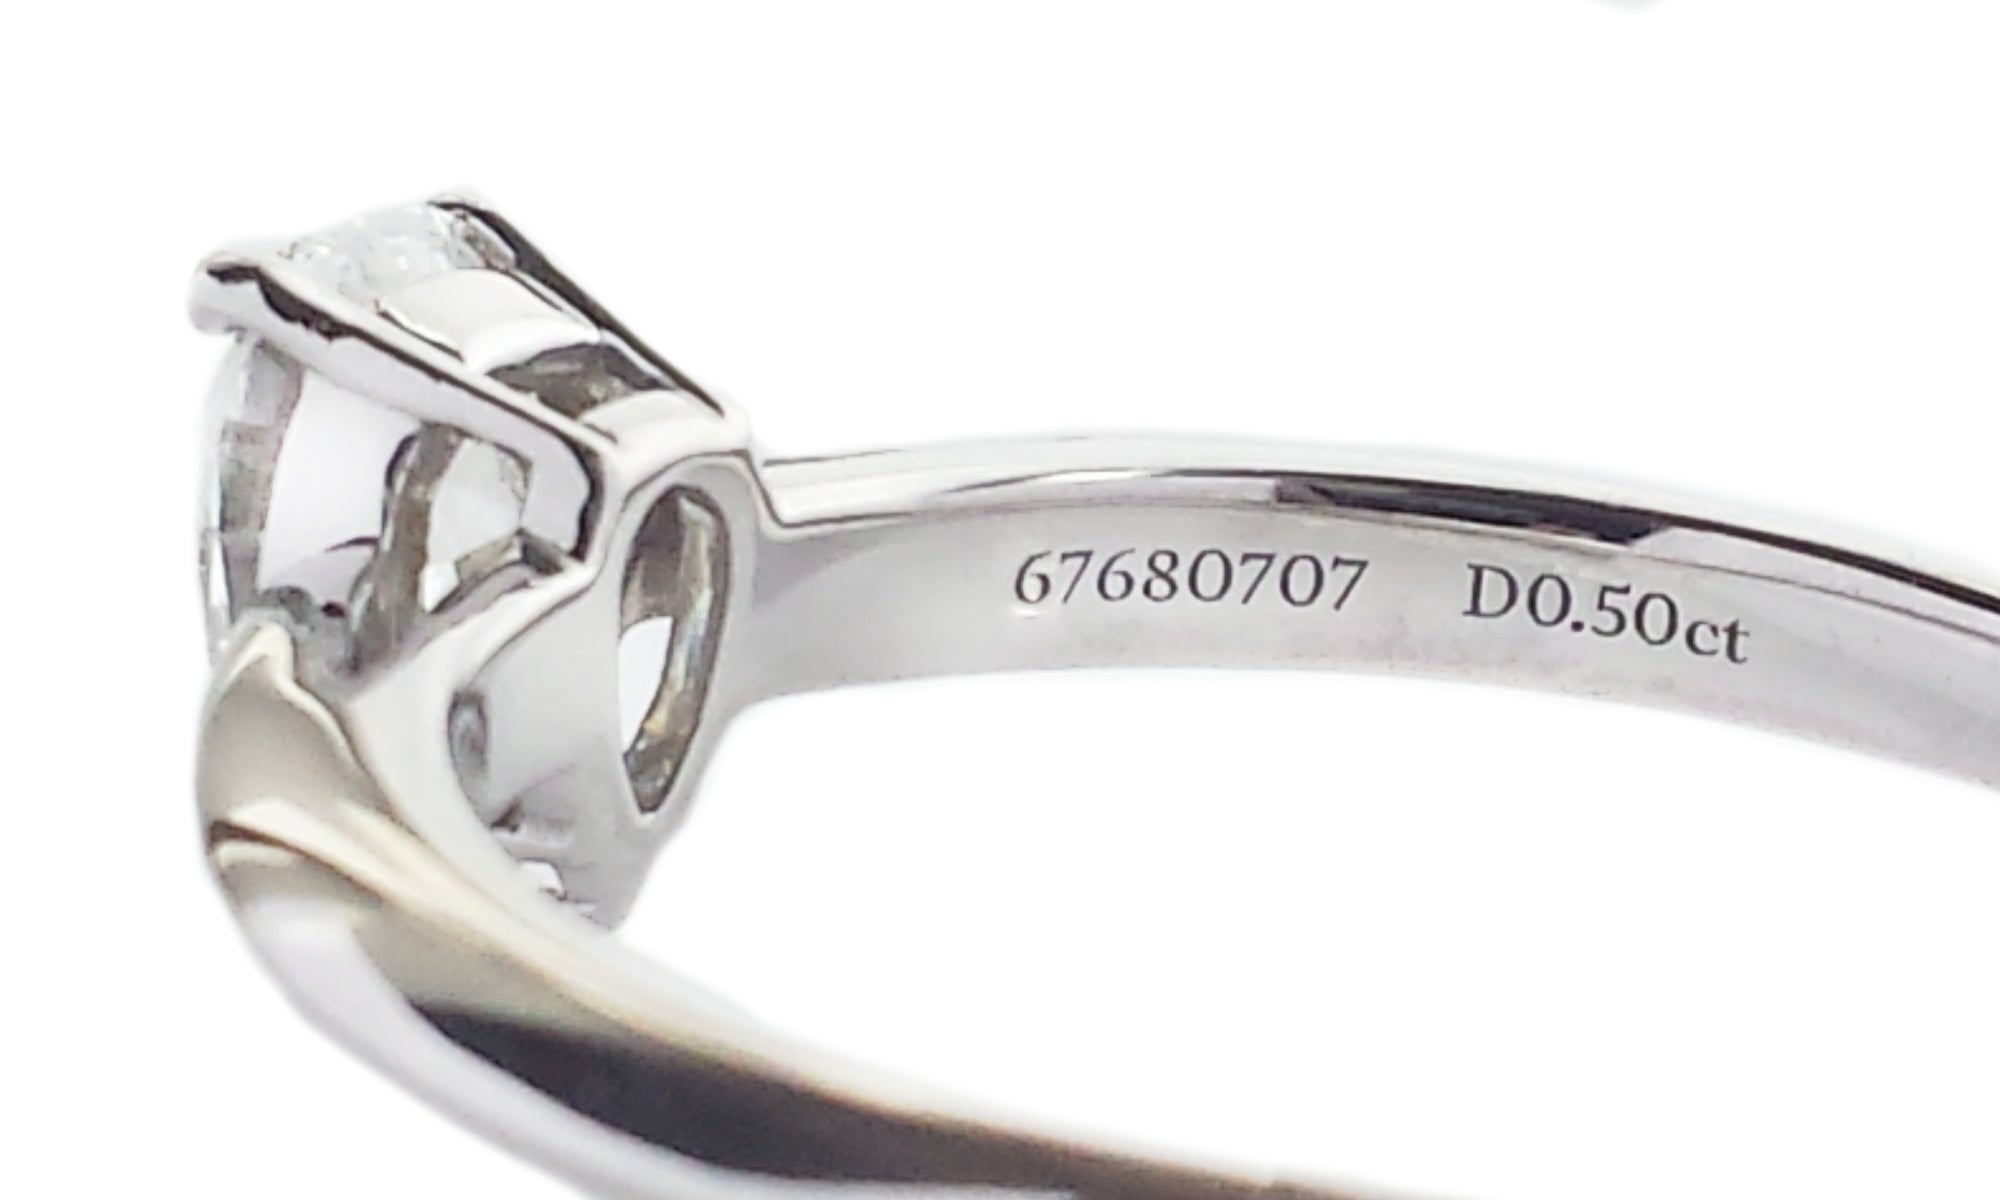 Tiffany & Co. 0.50ct I/VS1 Pear Shaped Diamond Engagement Ring